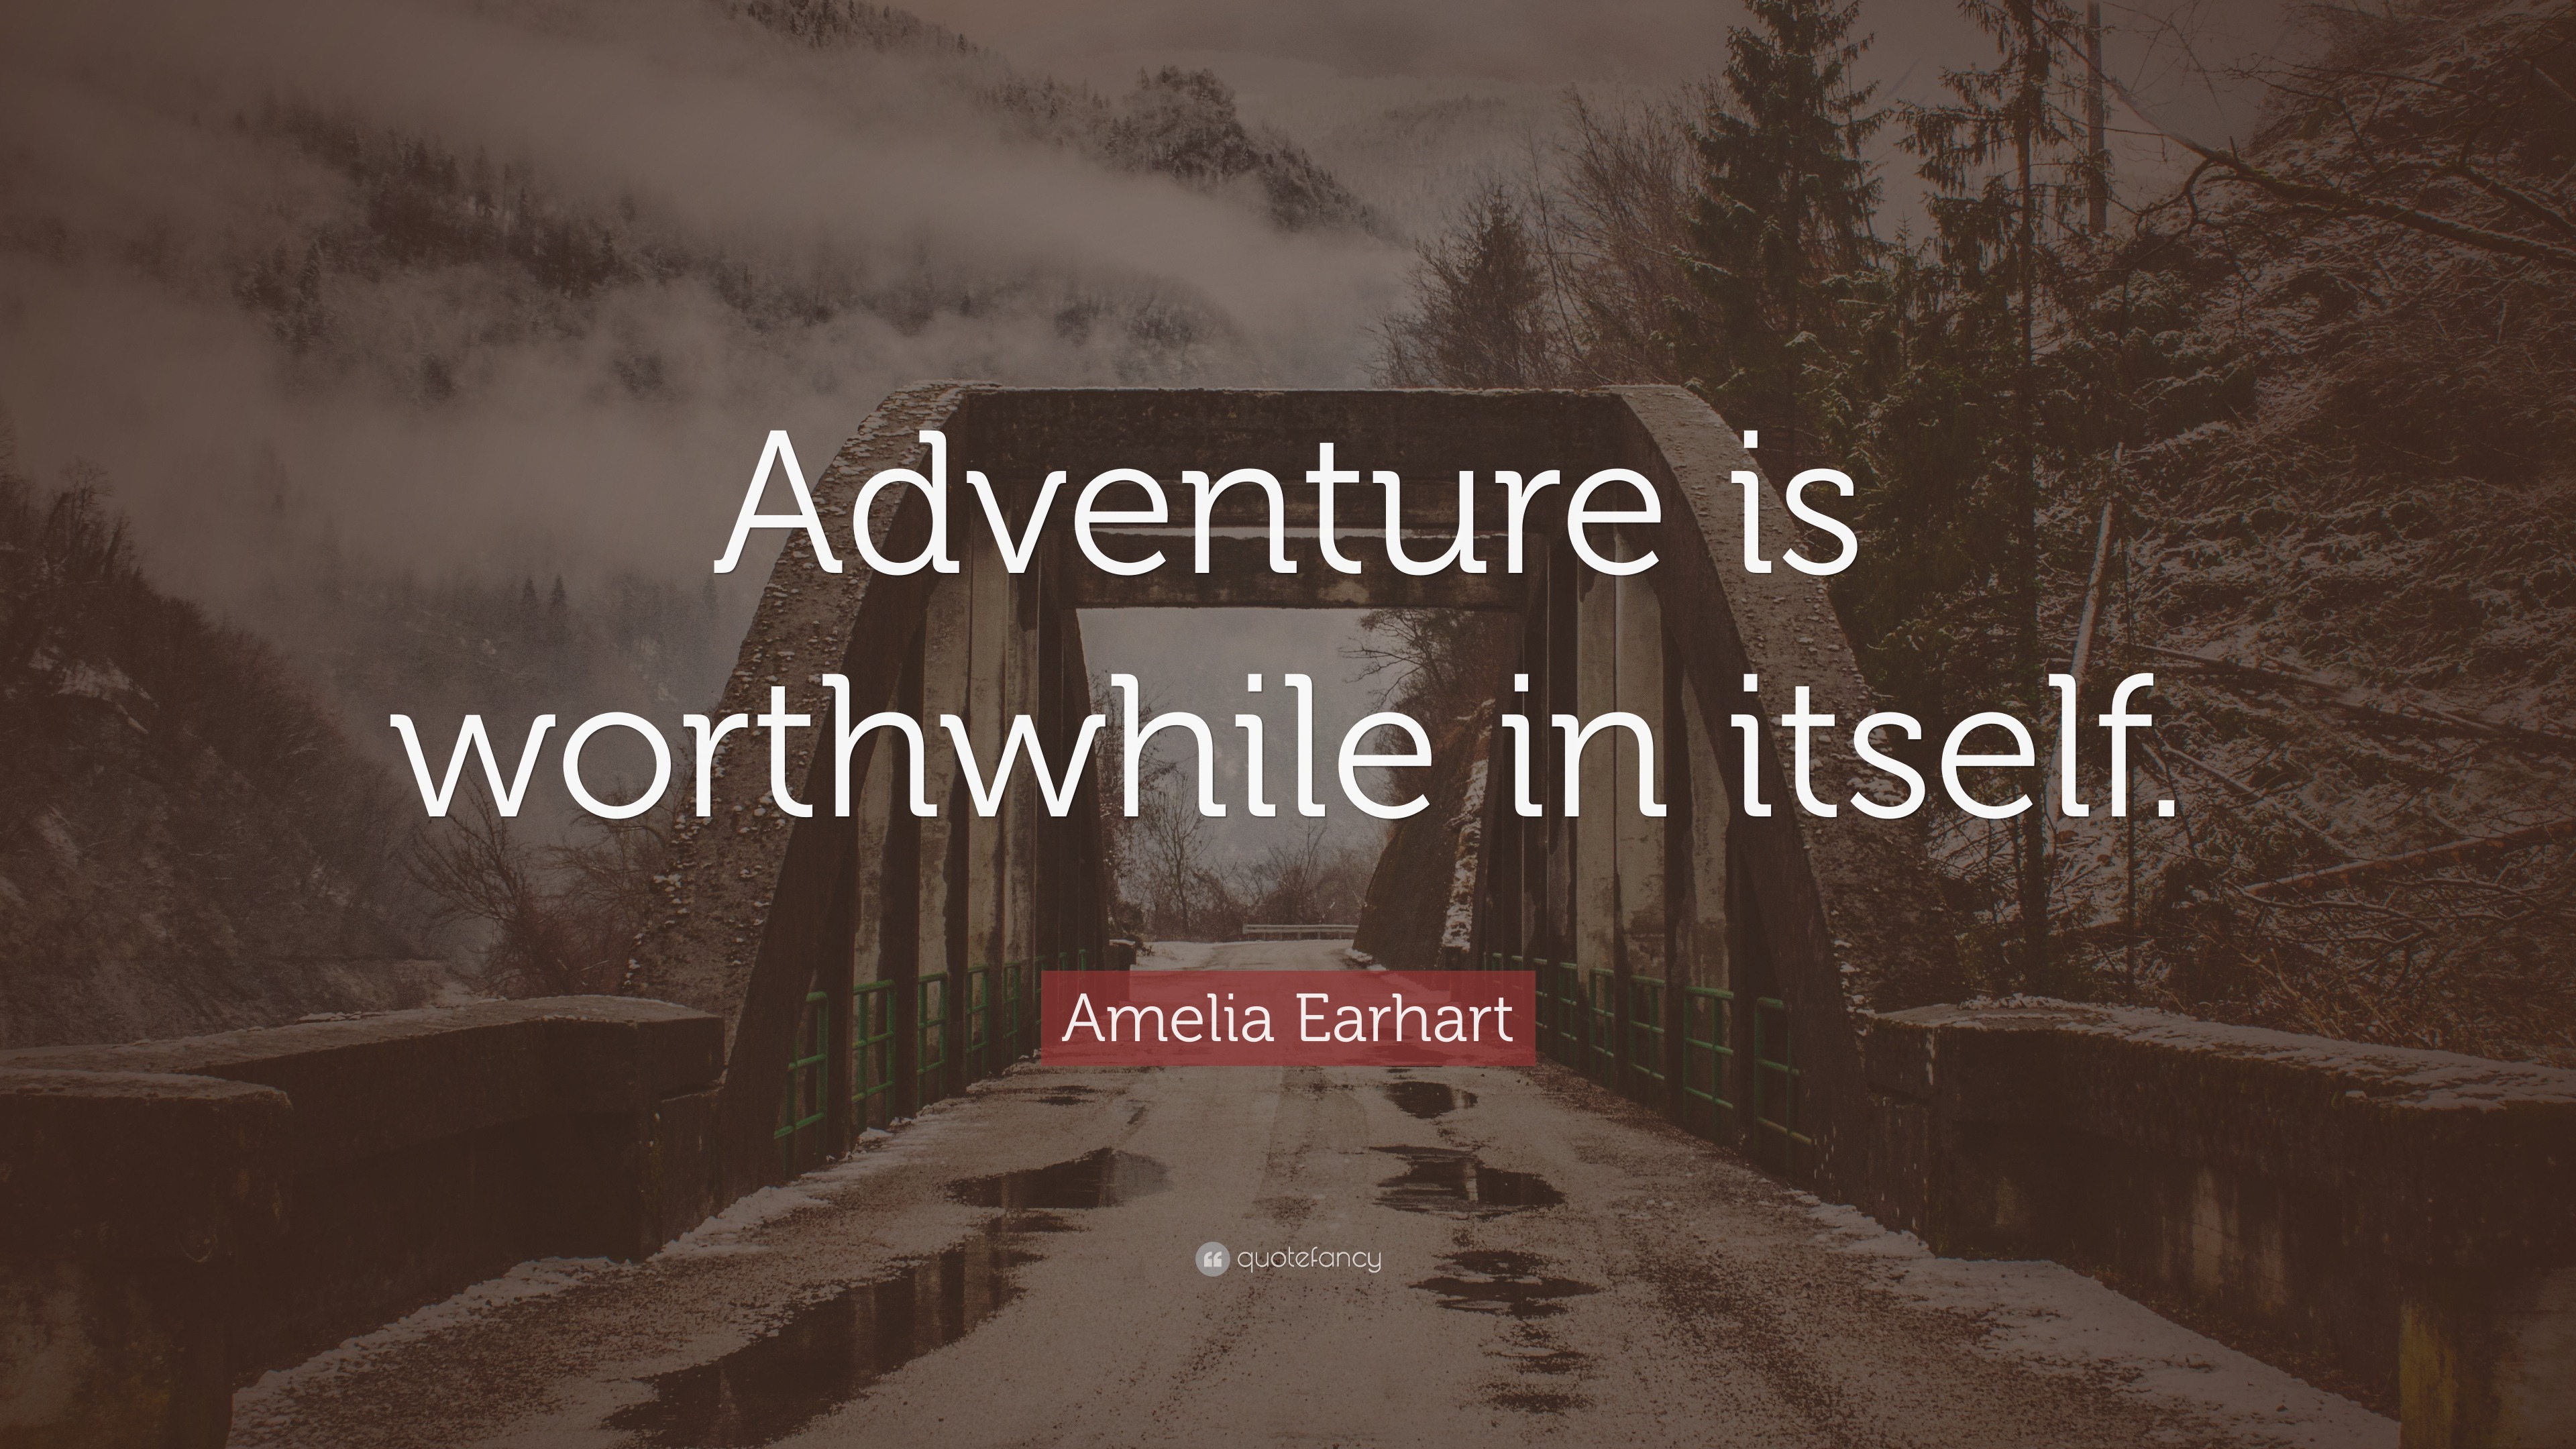 Amelia Earhart Quote: “Adventure is worthwhile in itself.”